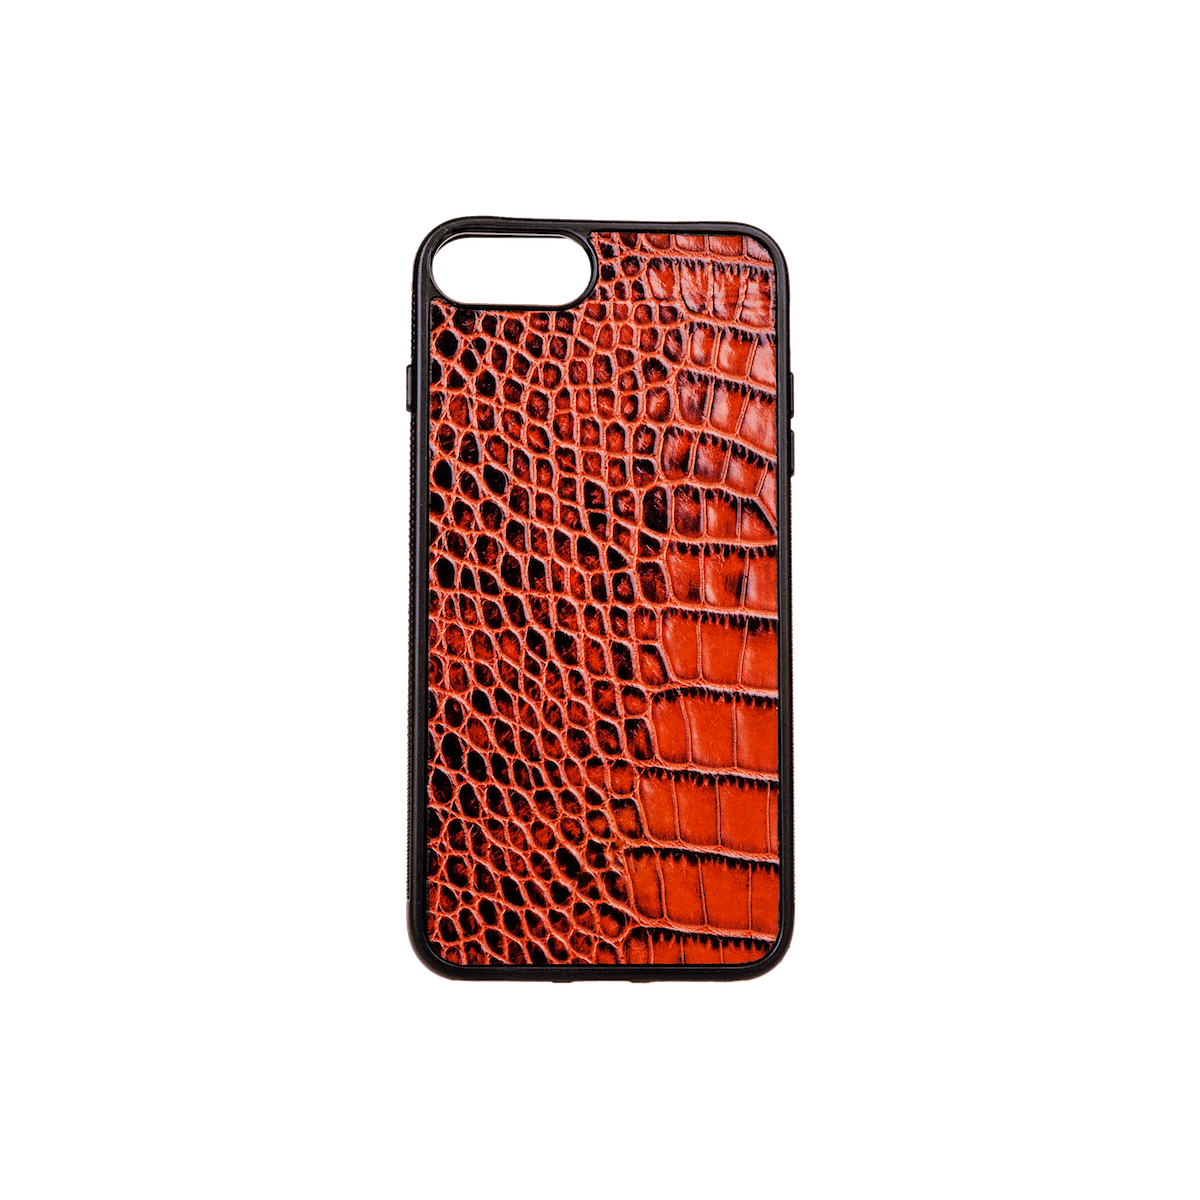 Iphone 7/8 Plus Case, Tan Croco Leather, MAISON JMK-VONMEL Luxe Gifts